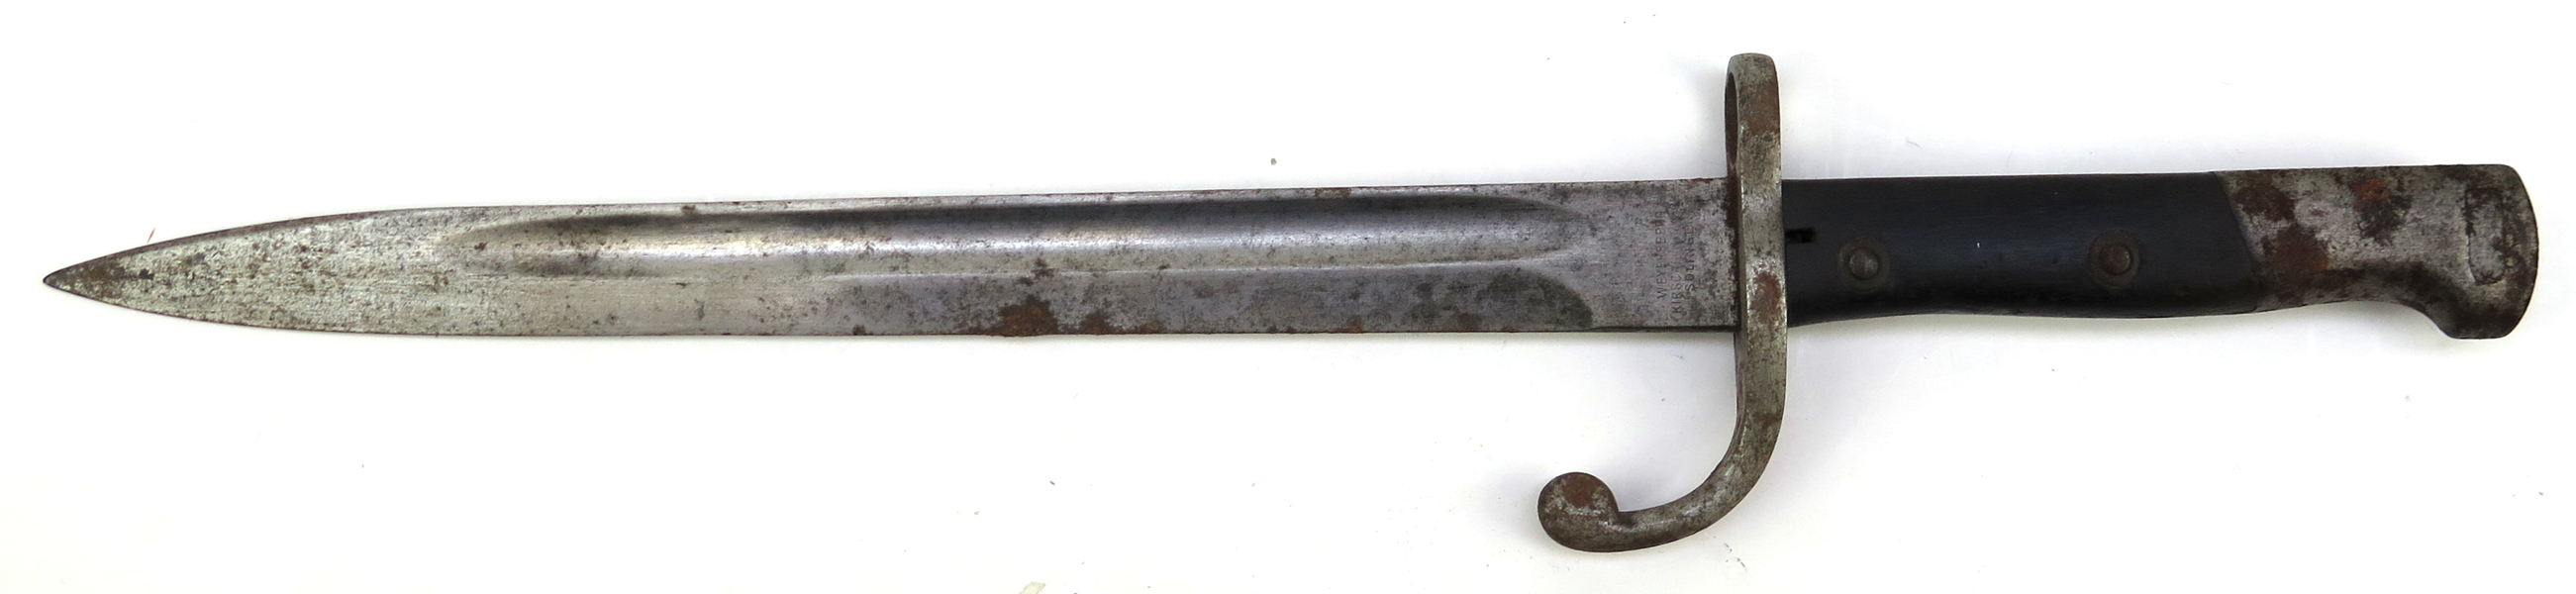 Bajonett för Mauser M/1908, stämplad Weyersberg, Kirschbaum & Co, Solingen_24345a_lg.jpeg